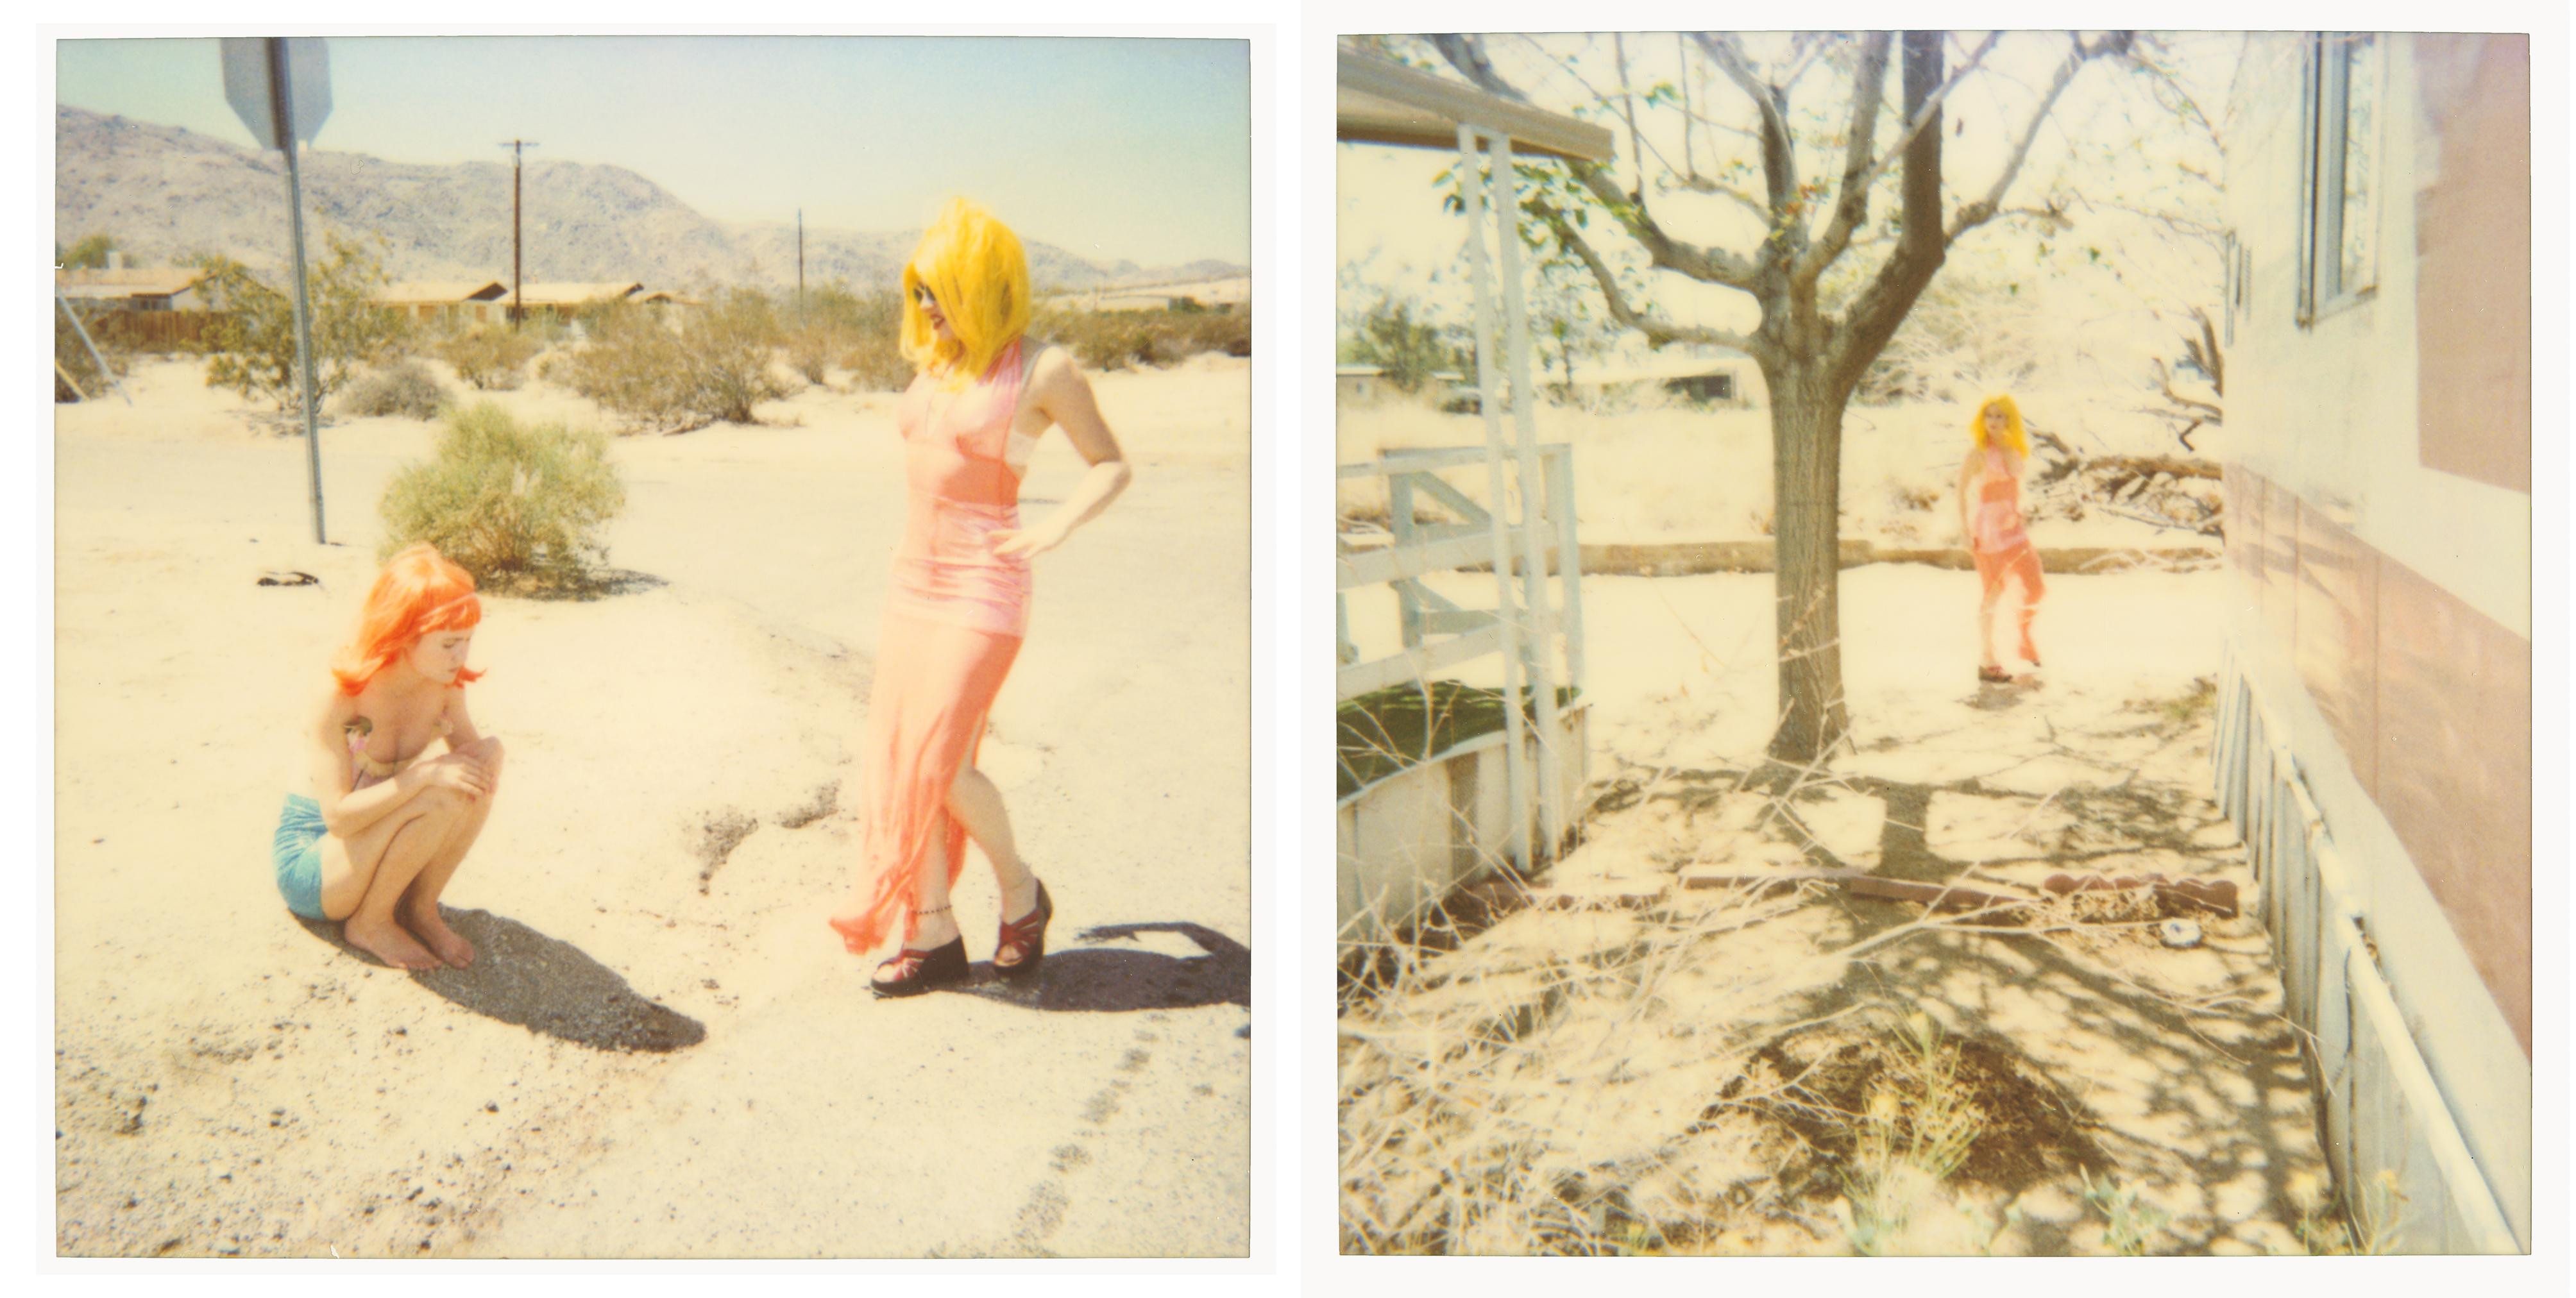 Stefanie Schneider Color Photograph - Radha and Max on Dirt Road (29 Palms, CA) - analog, Polaroid, Contemporary